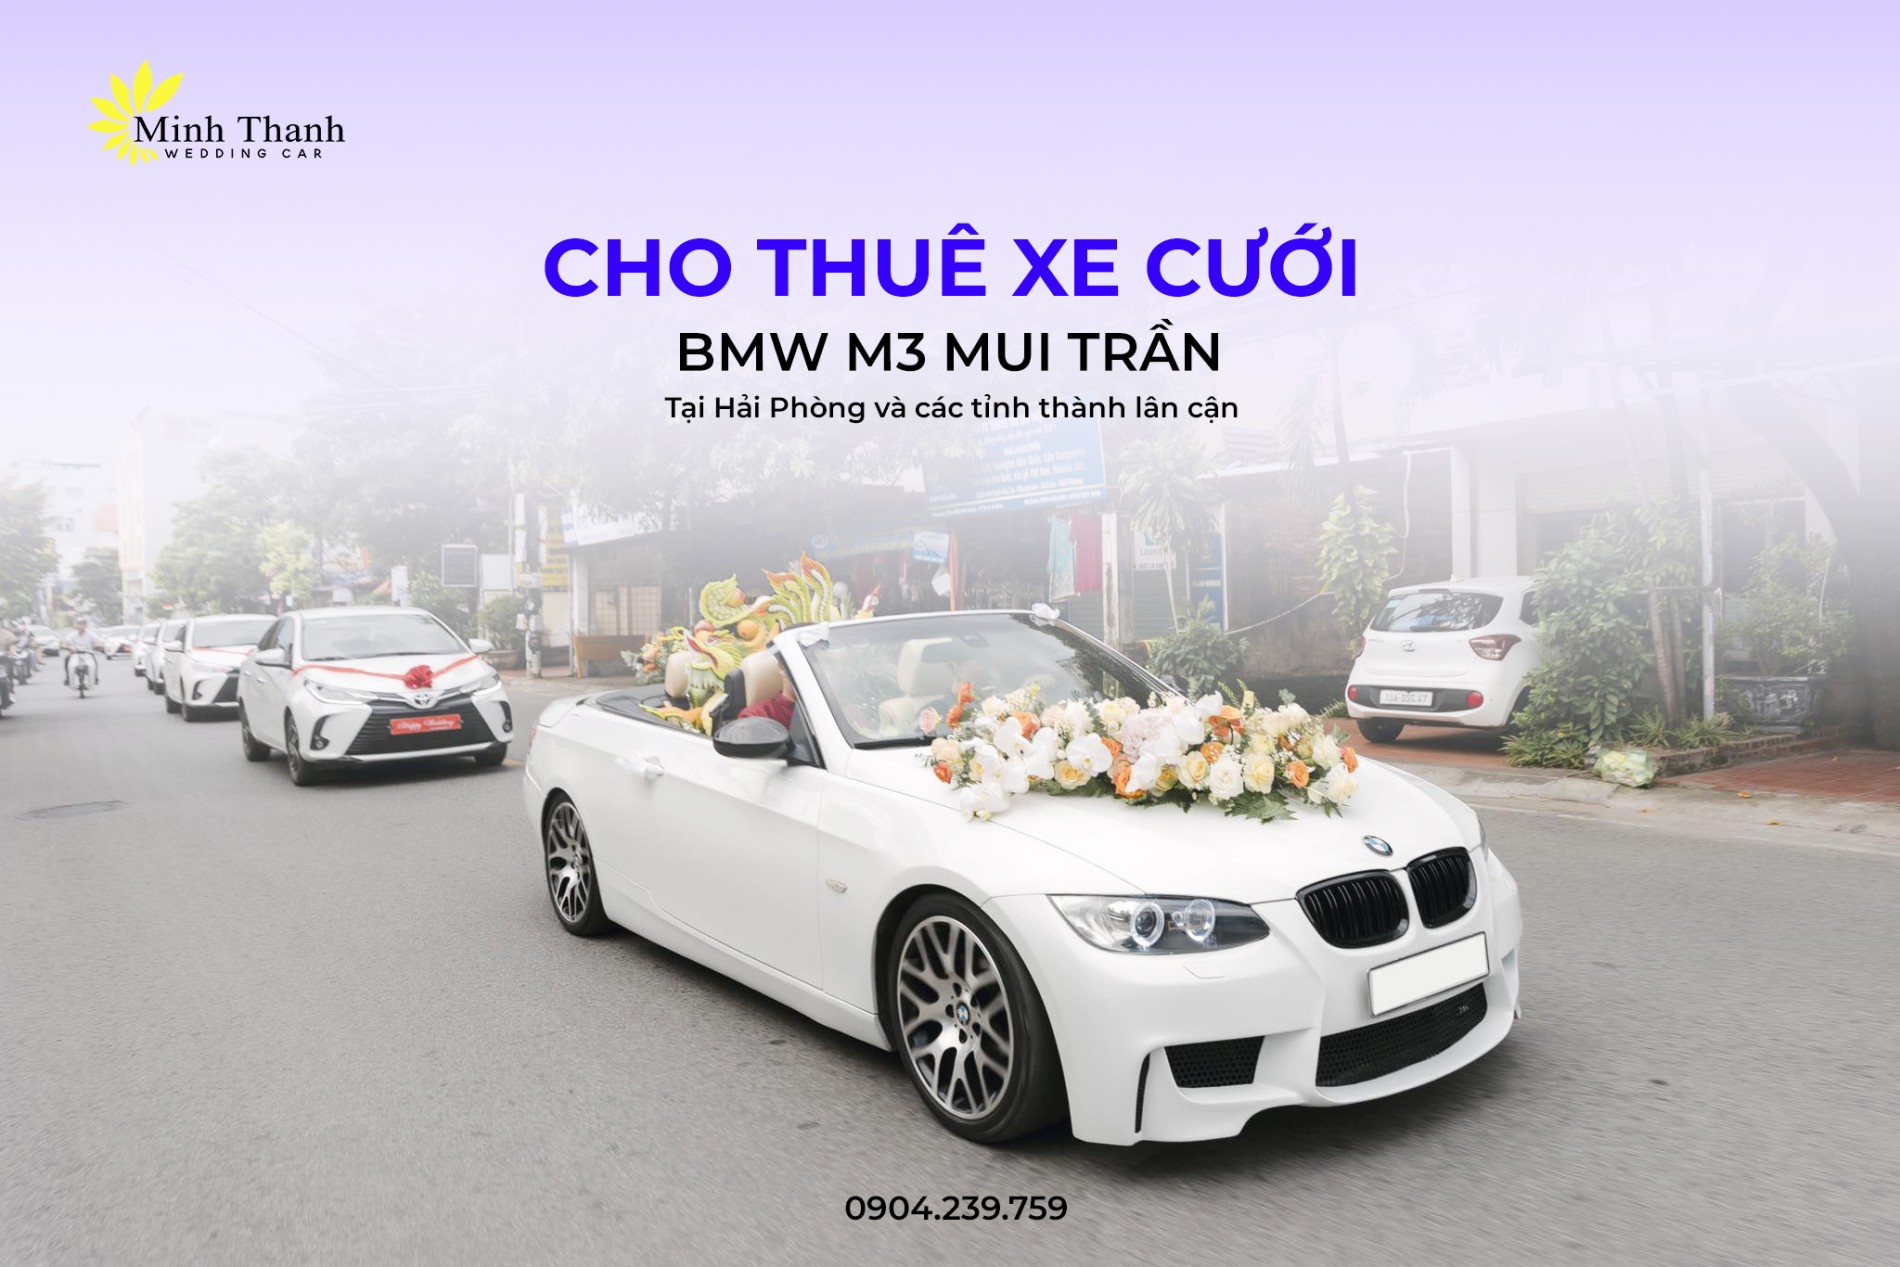 Cho thue xe cuoi mui tran tai Hai Phong